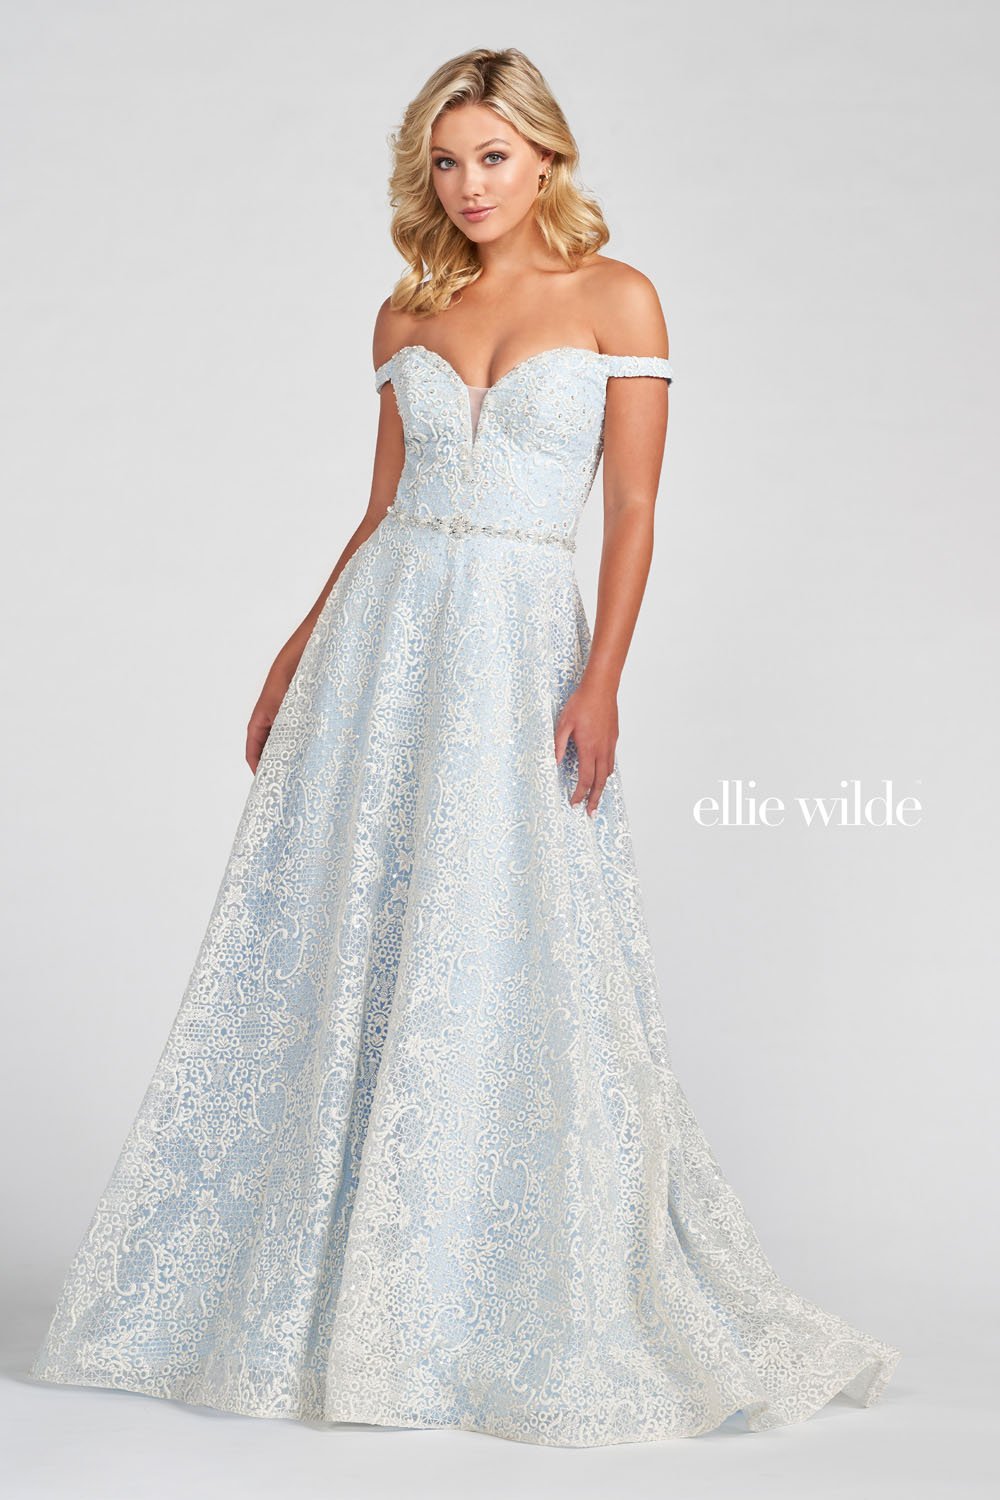 Ellie Wilde Ivory Light Blue EW122115 Prom Dress Image.  Ivory Light Blue formal dress.